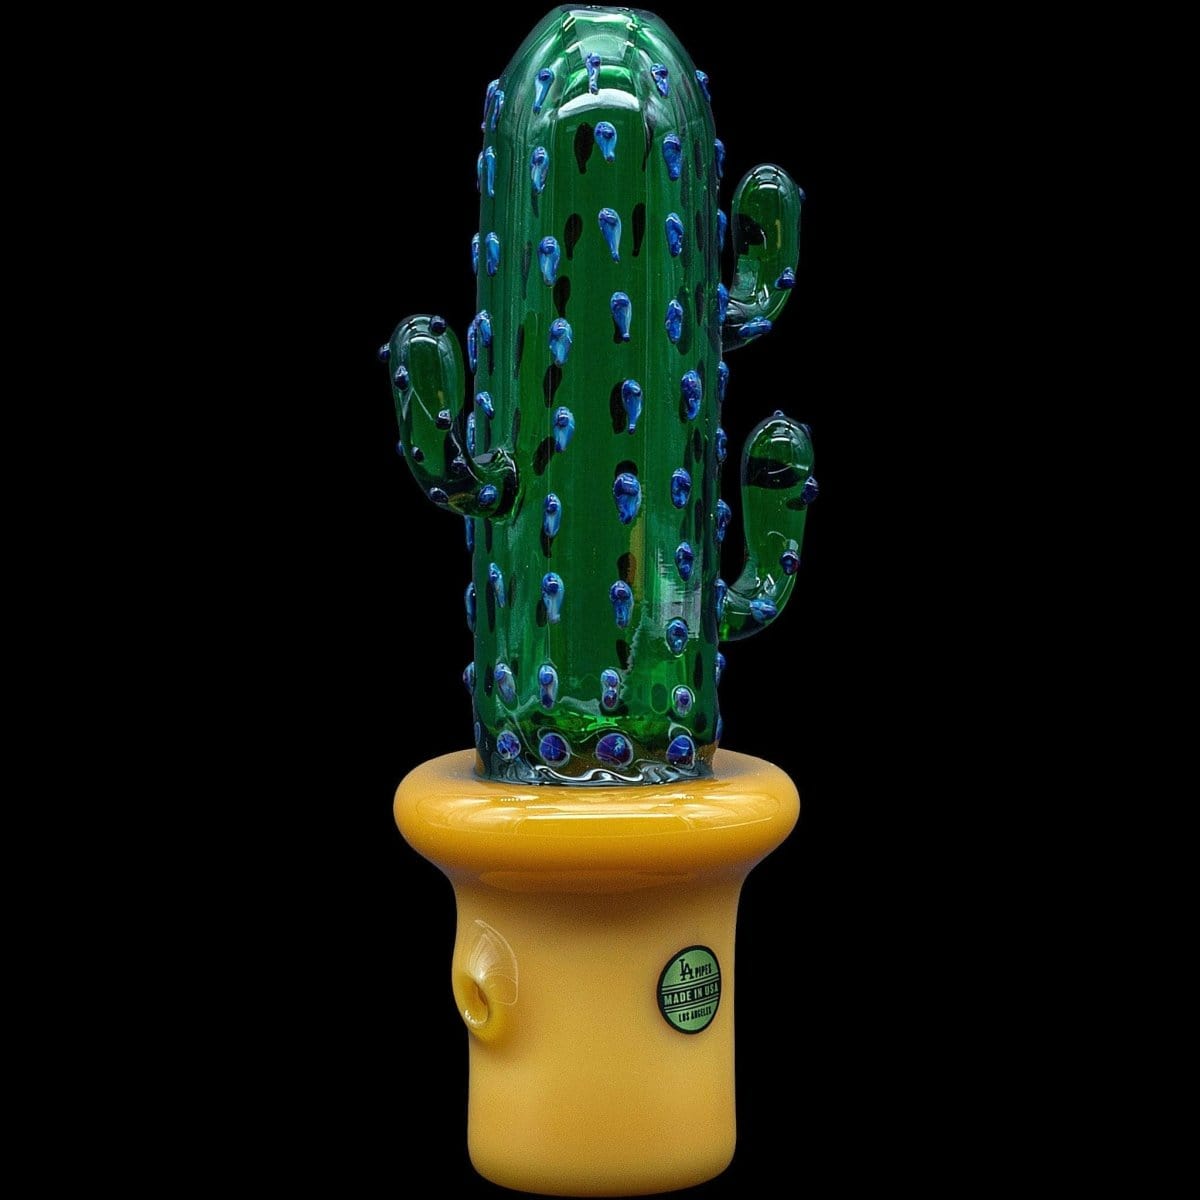 LA Pipes Hand Pipe "Glass Saguaro" Cactus Pipe